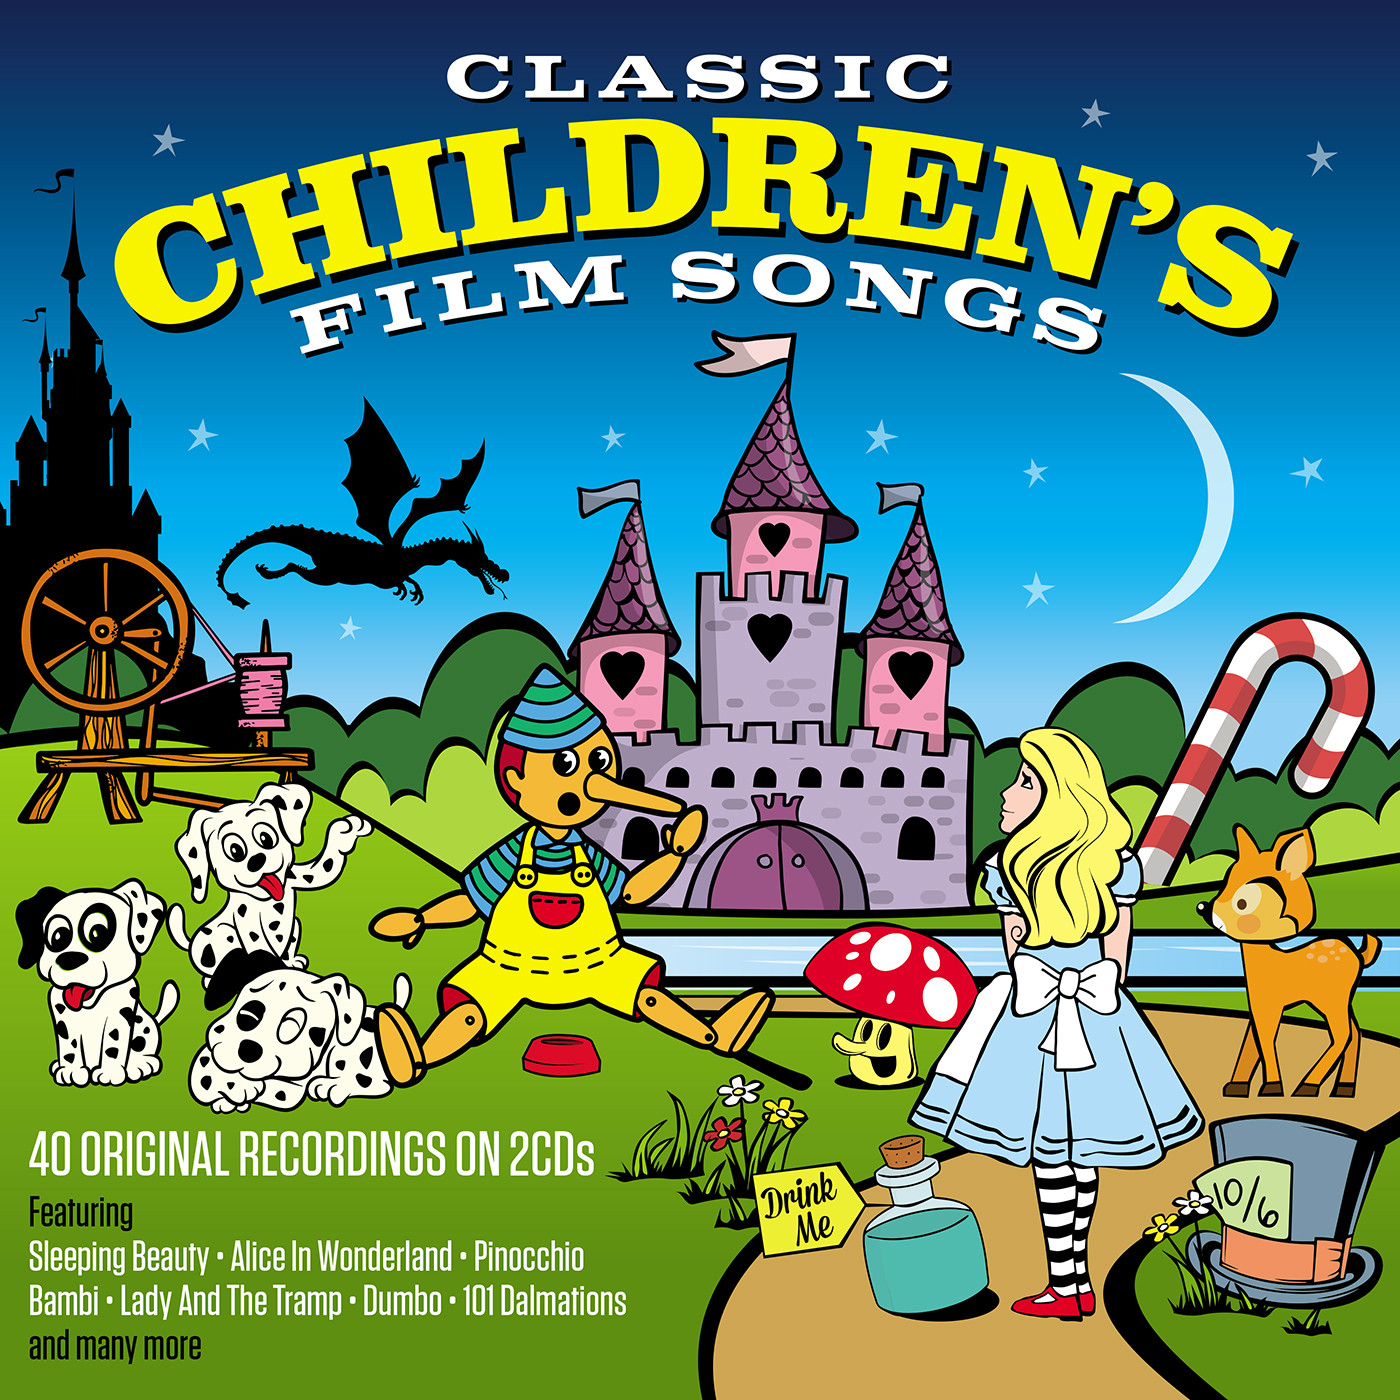 Classic Children's Film Songs